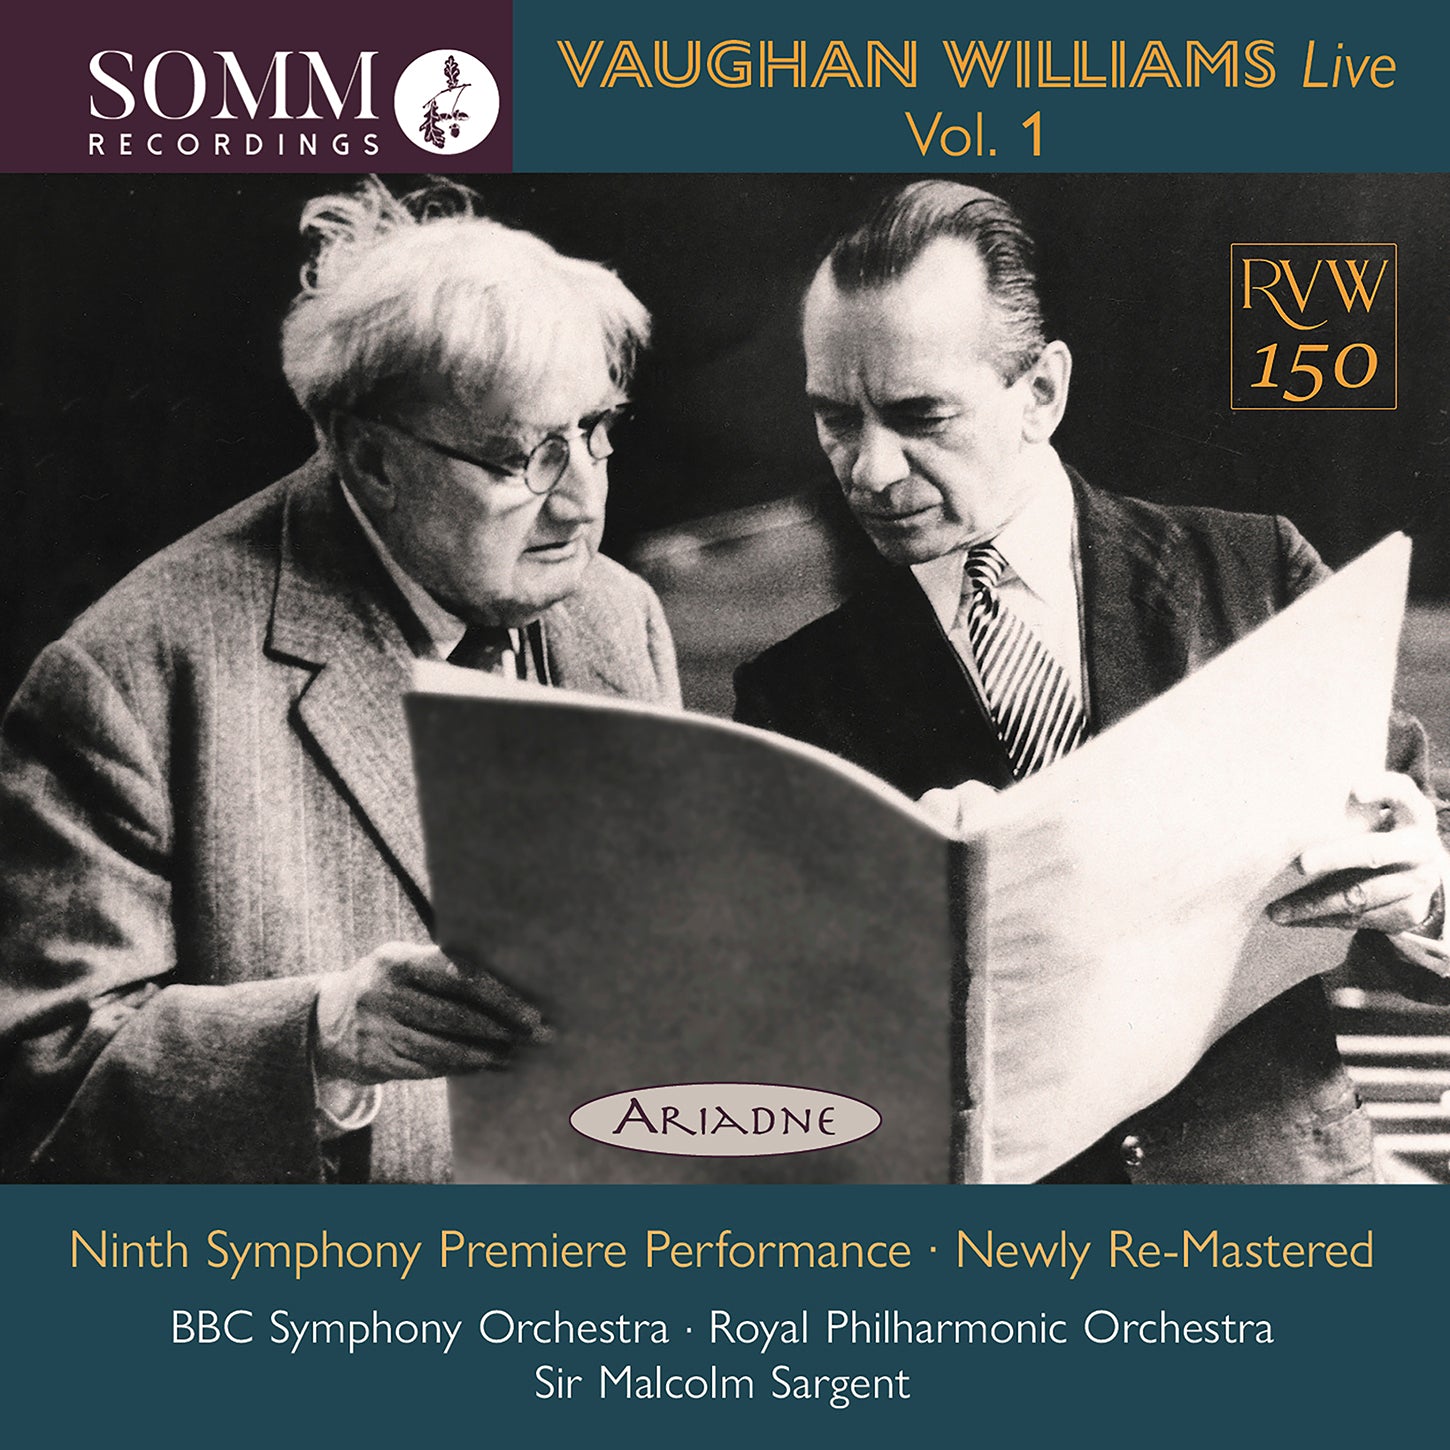 Vaughan Williams Live Vol. 1 / Sargent, BBC Symphony & Royal Philharmonic Orchestras